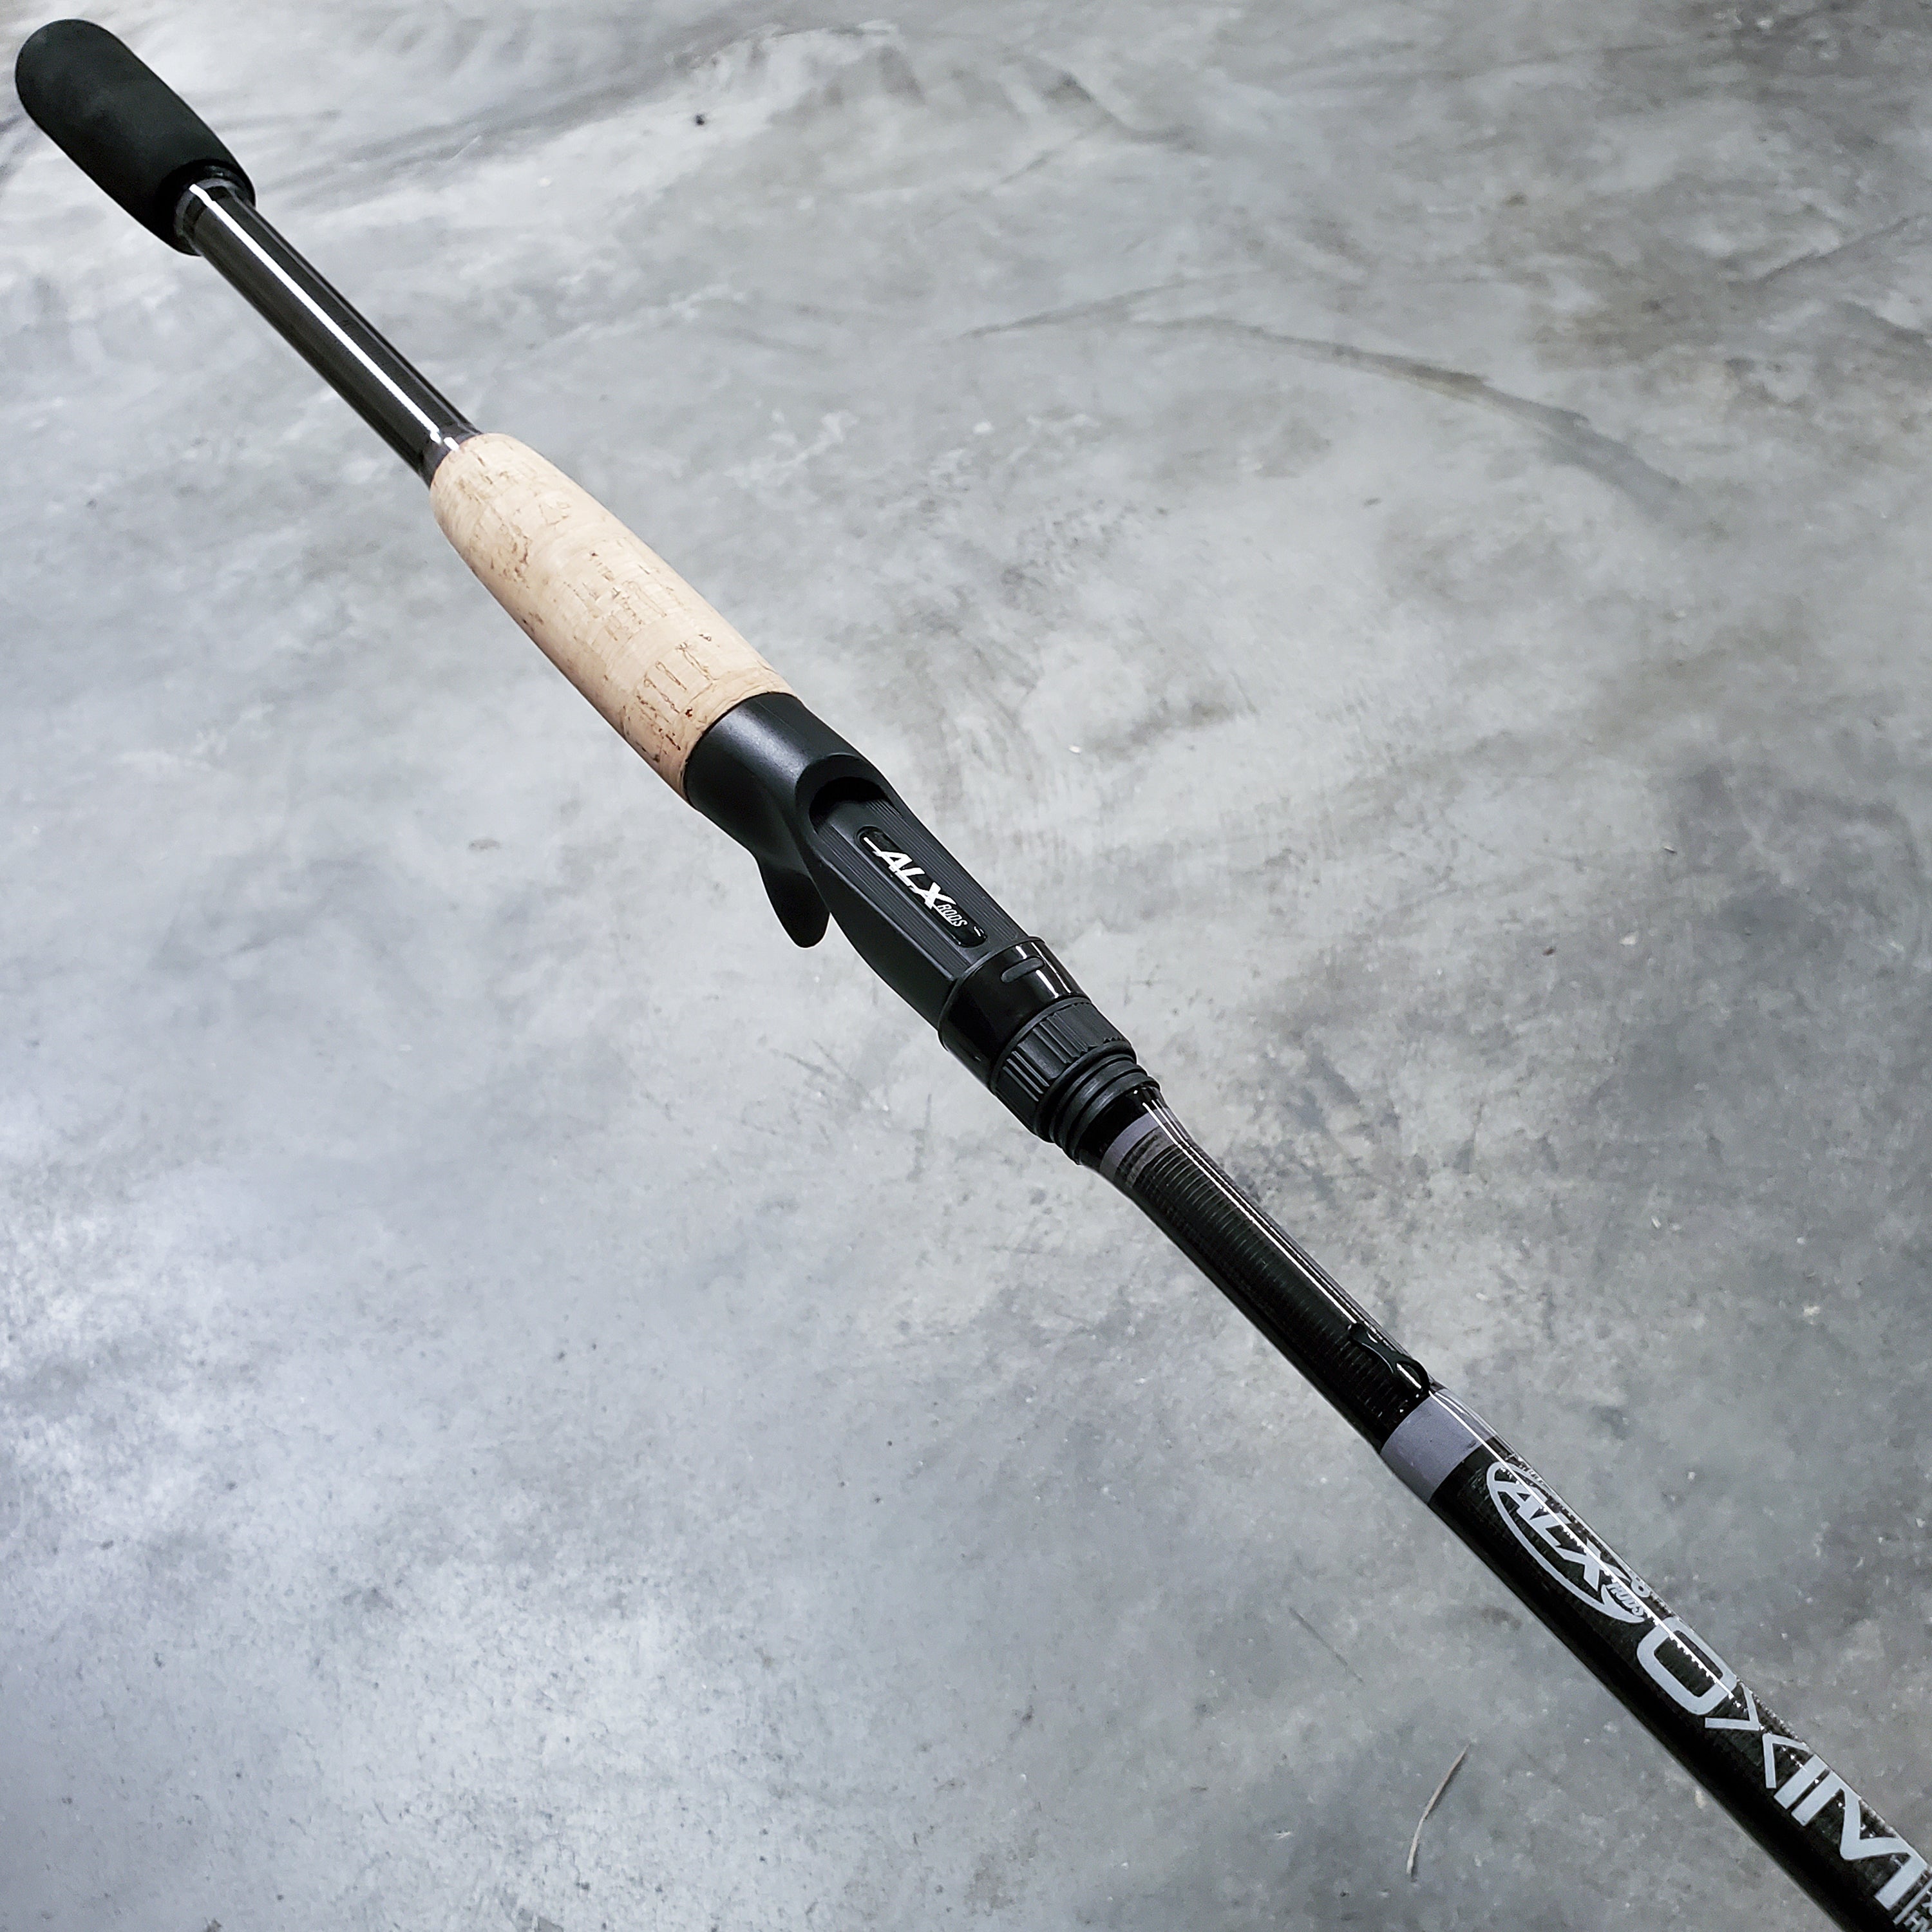 Pinnacle Cork/Cork Composite Rear Fishing Rod Grip, 14 Straight Grip